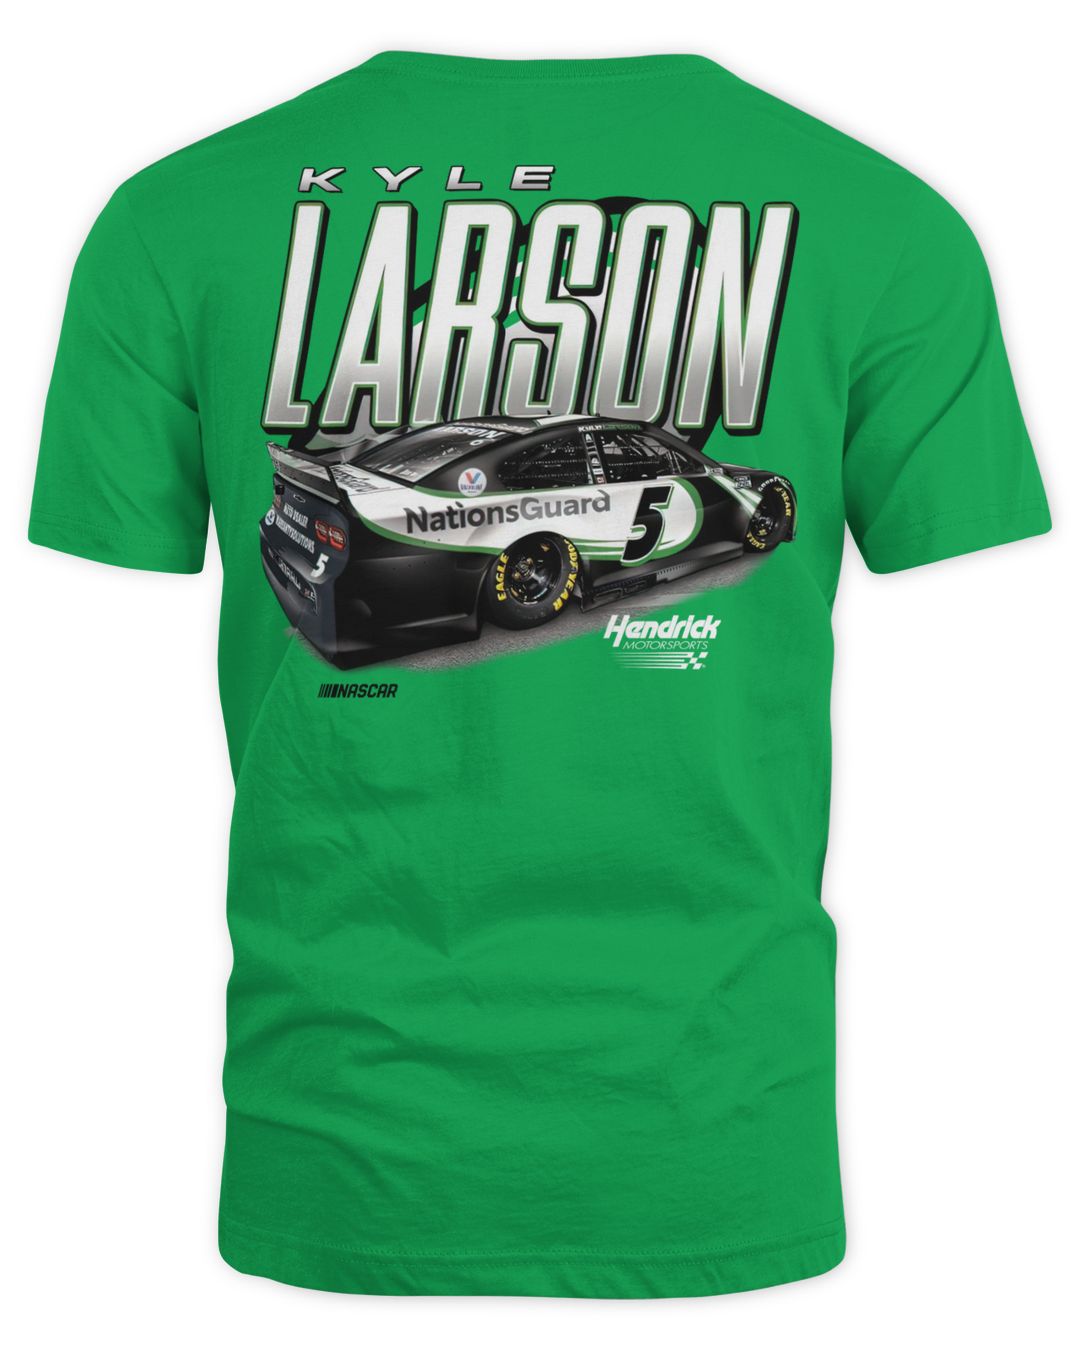 Kyle Larson Hendrick Motorsports Team Collection Nations Guard Graphic 2-Spot Shirt